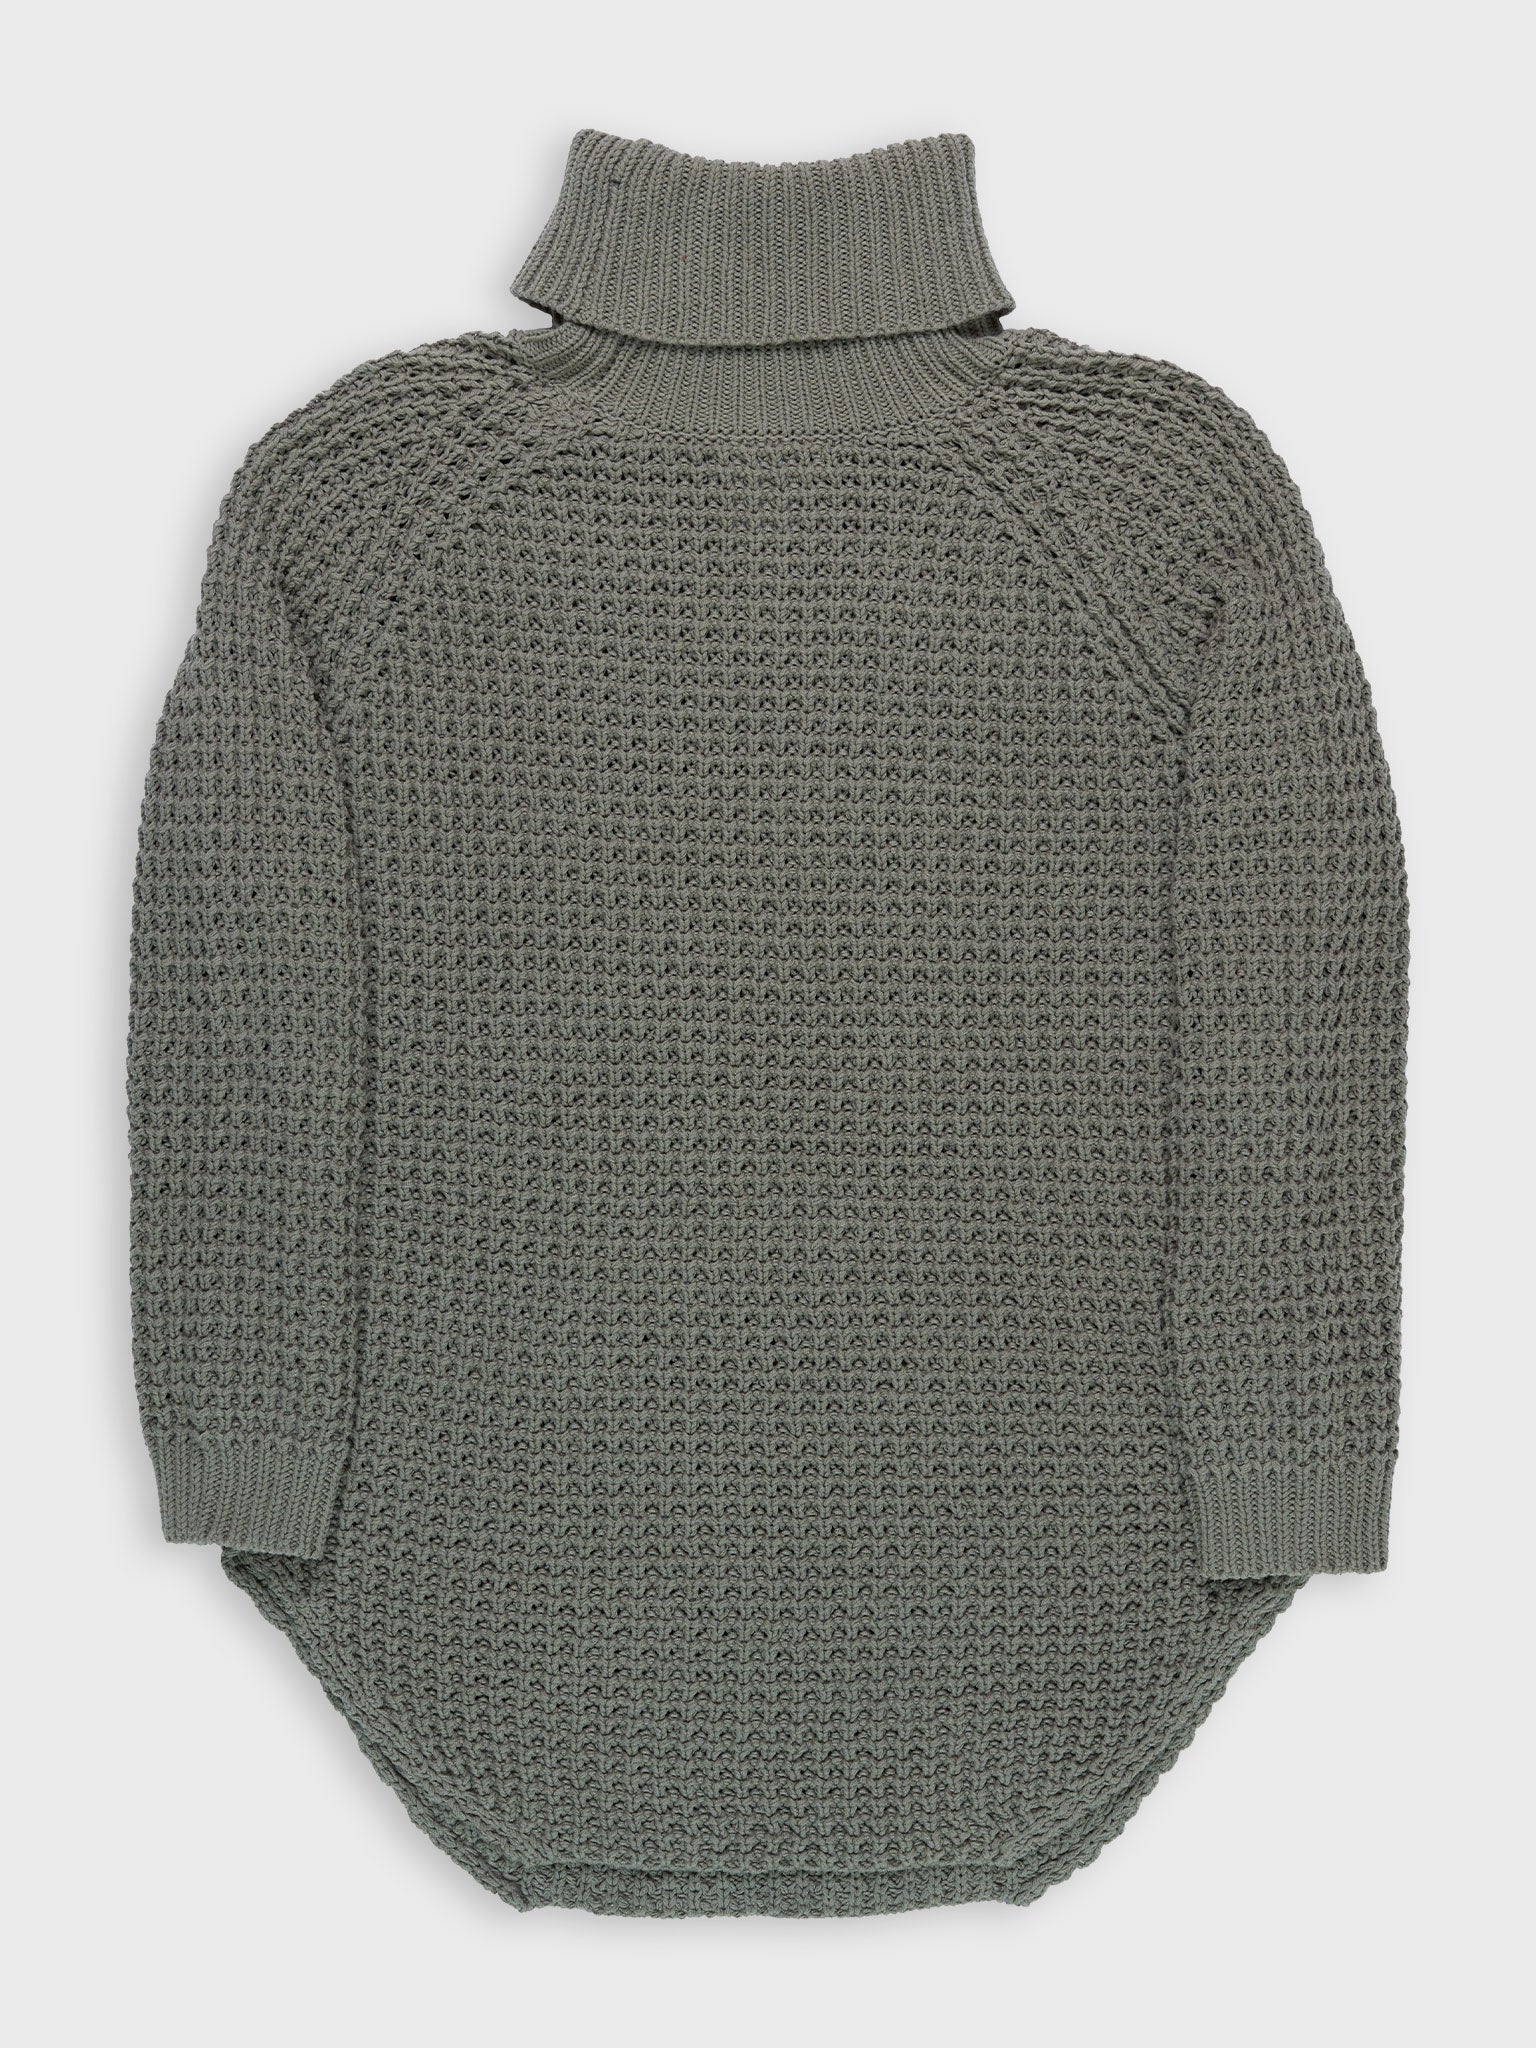 Grand Sweater 36 Khaki/Grey